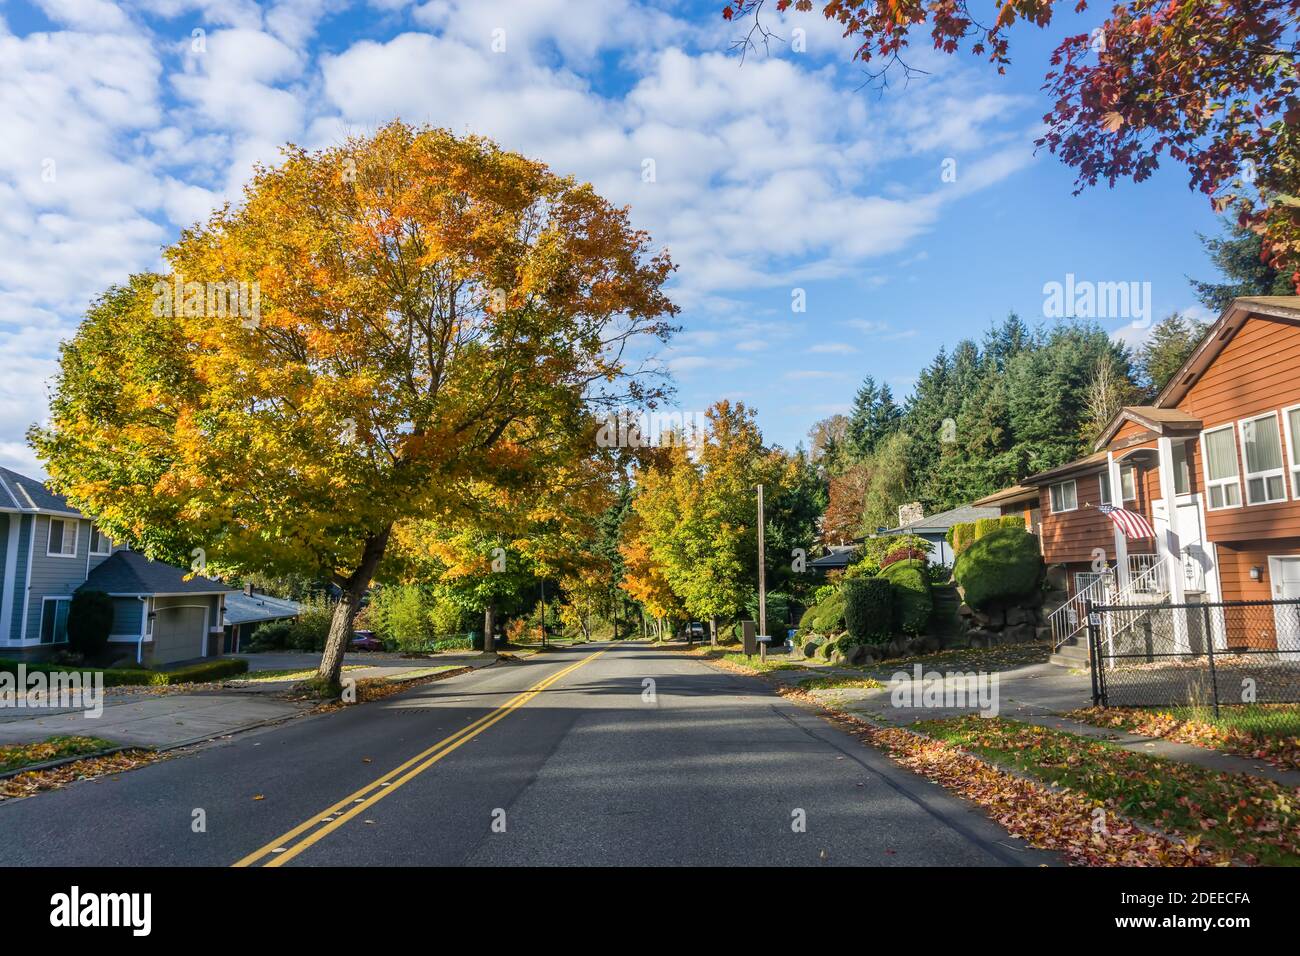 Autumn leaves on roadside trees in Burien, Washington. Stock Photo